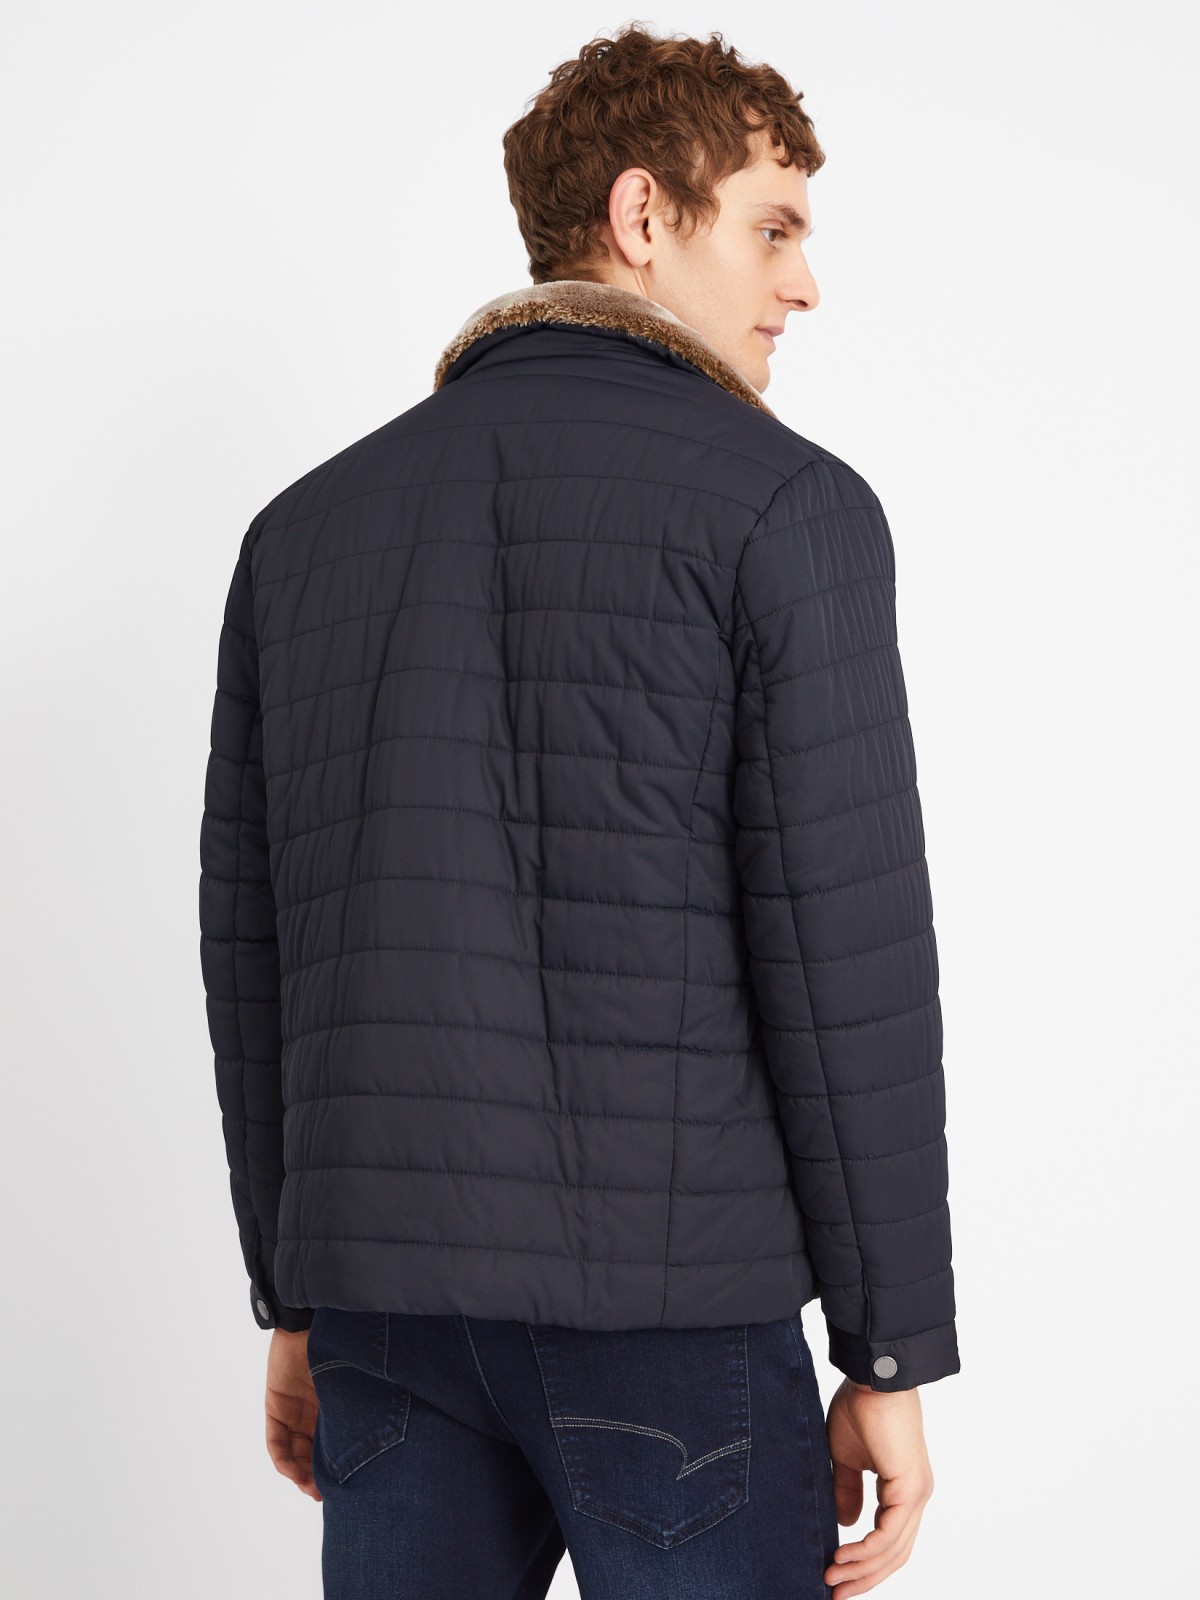 Тёплая стёганая куртка-косуха с подкладкой из экомеха на синтепоне zolla 013345150044, цвет темно-синий, размер L - фото 6